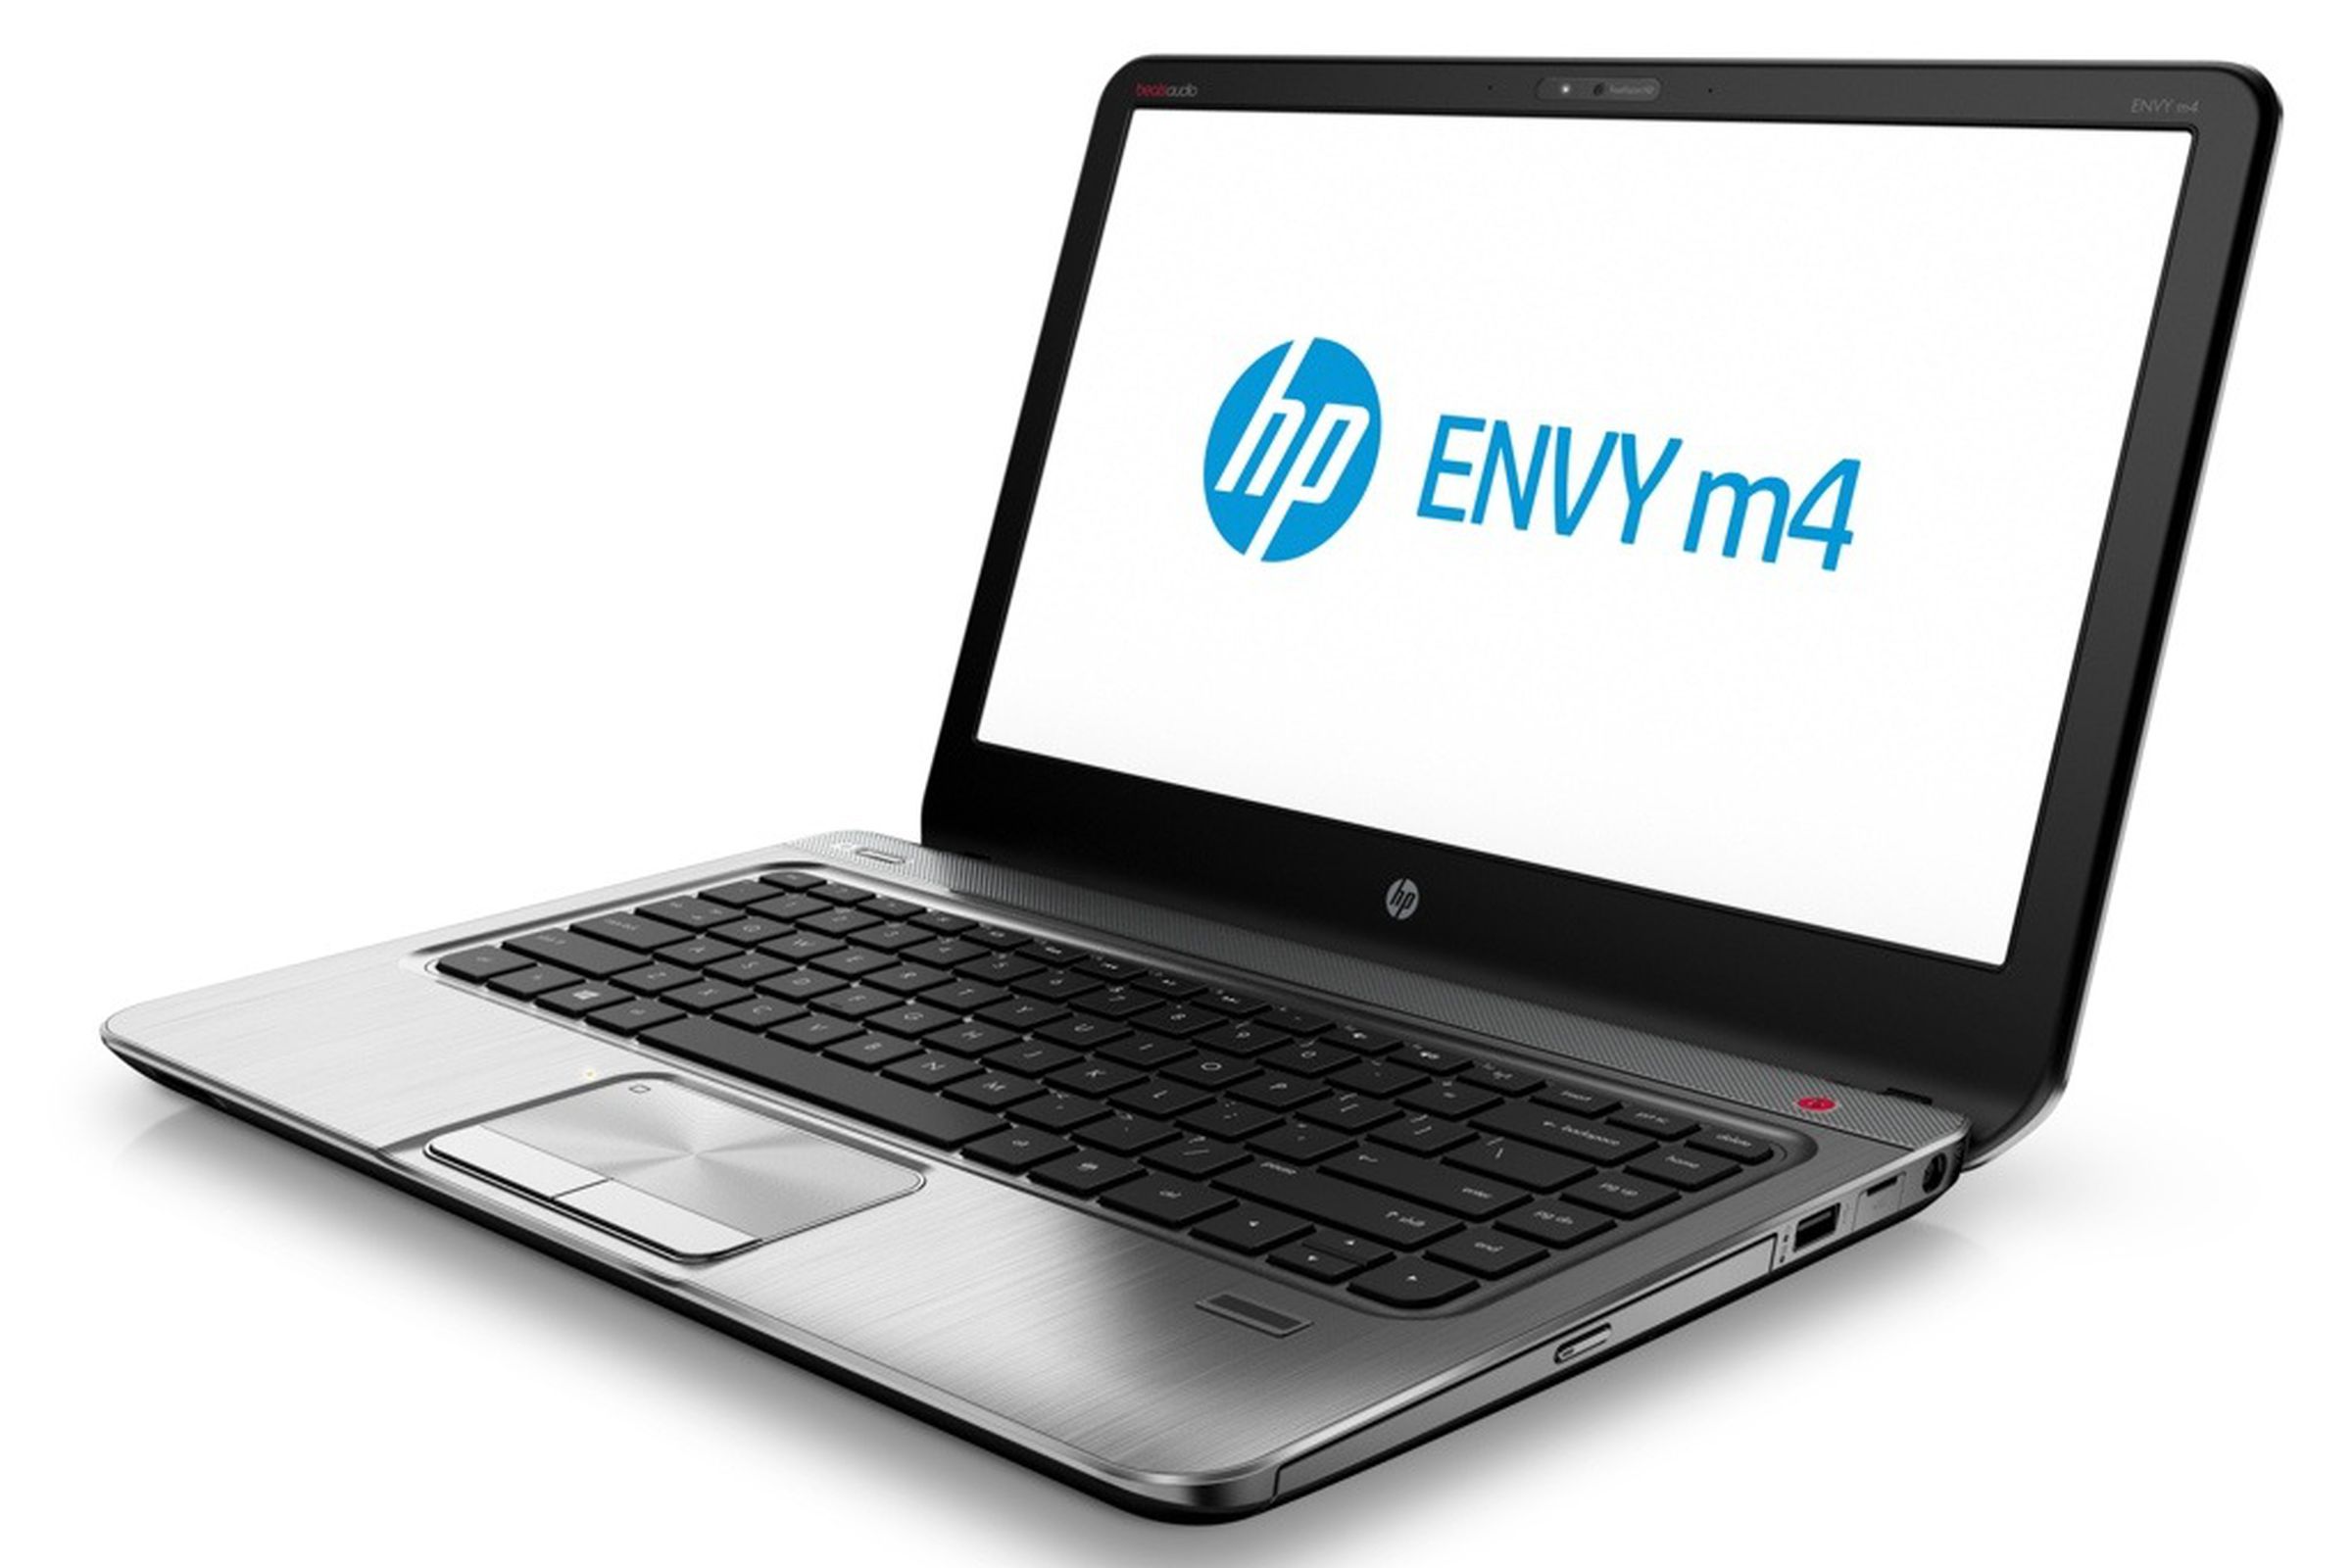 HP Envy m4 facing